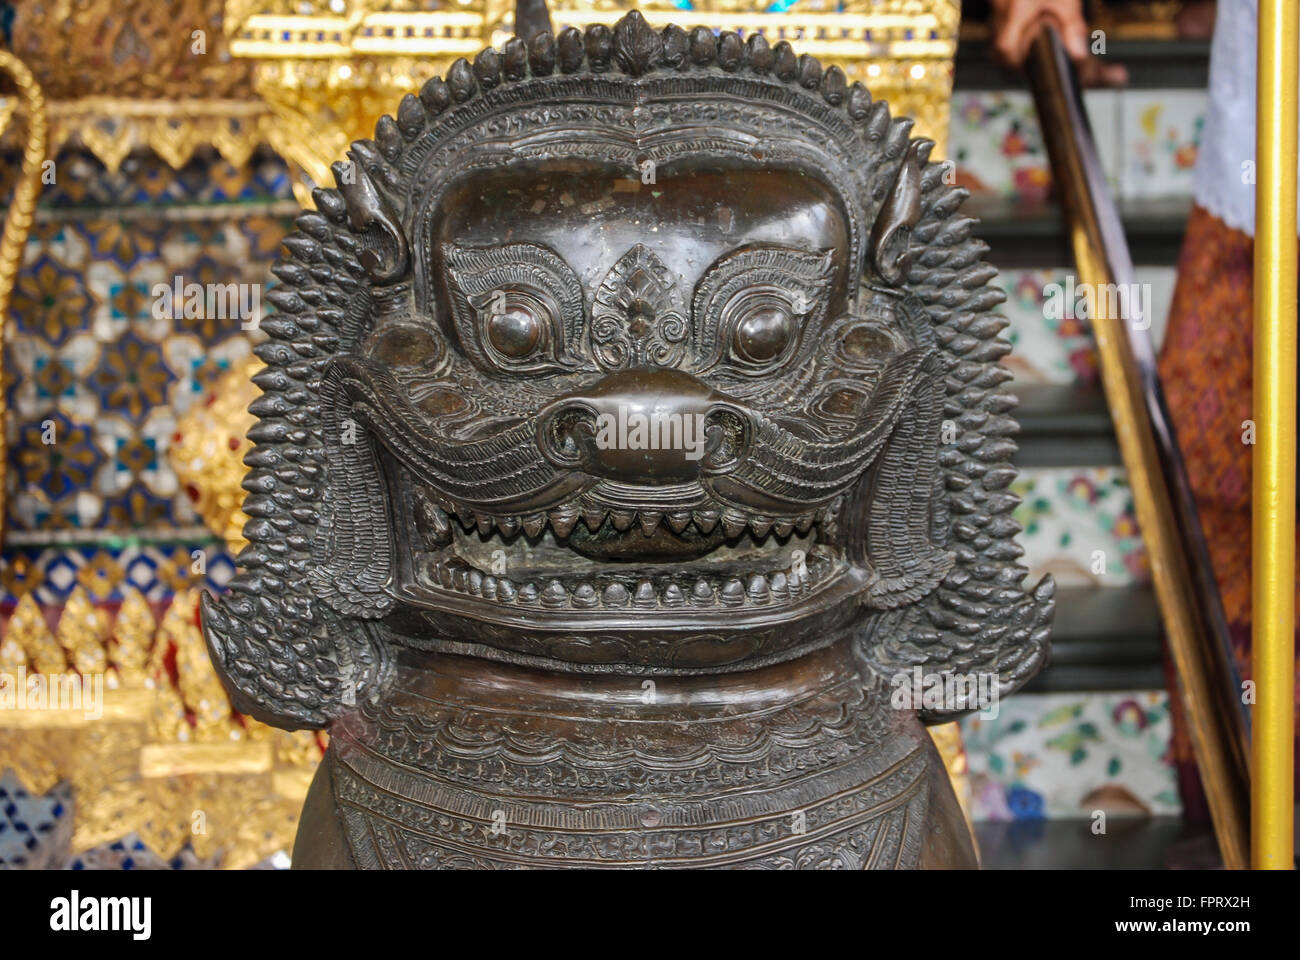 Mythical beast at the King's Palace in Bangkok, Thailand. Stock Photo